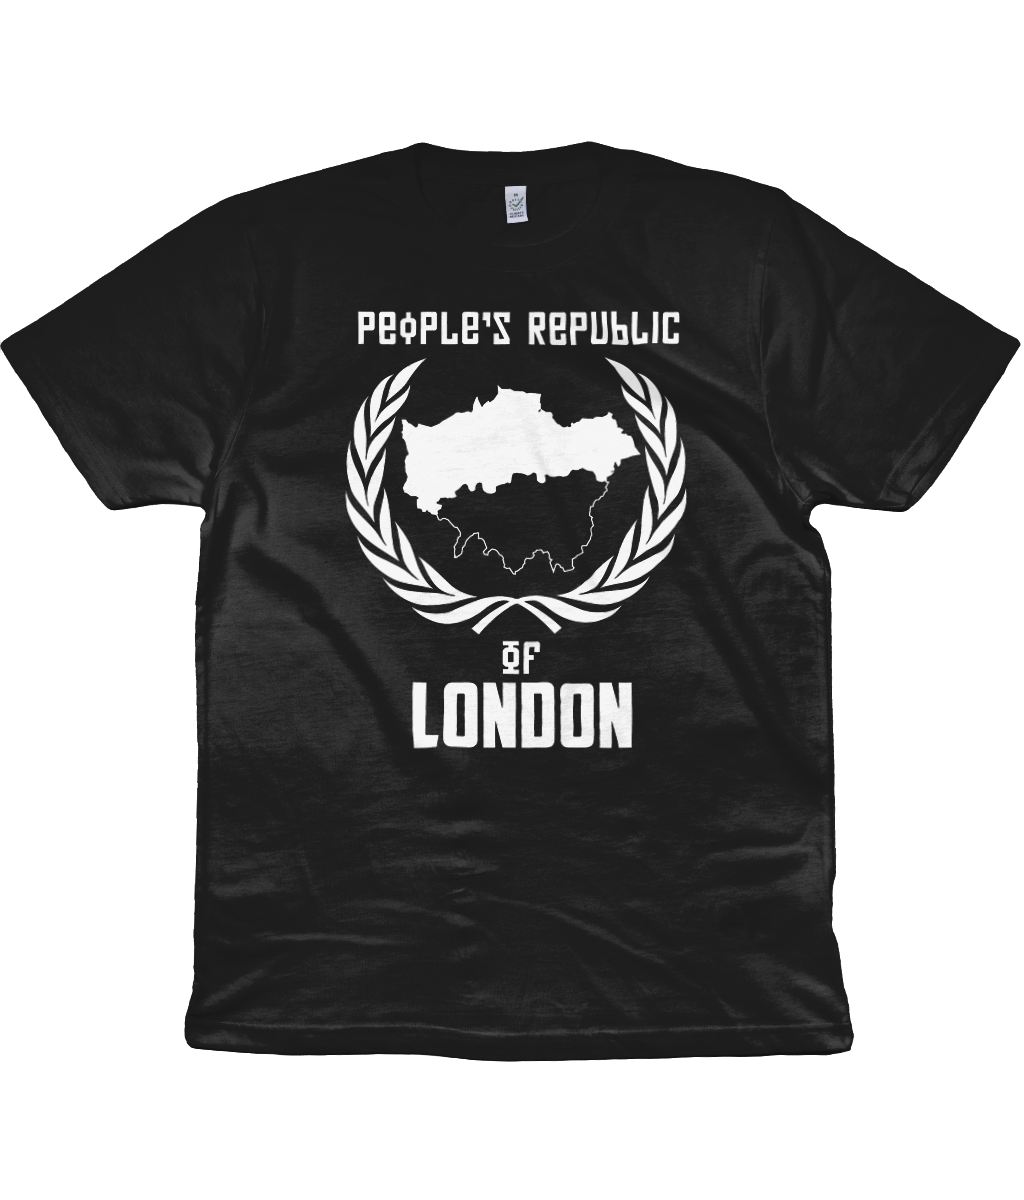 People's Republic of London Unisex T-Shirt